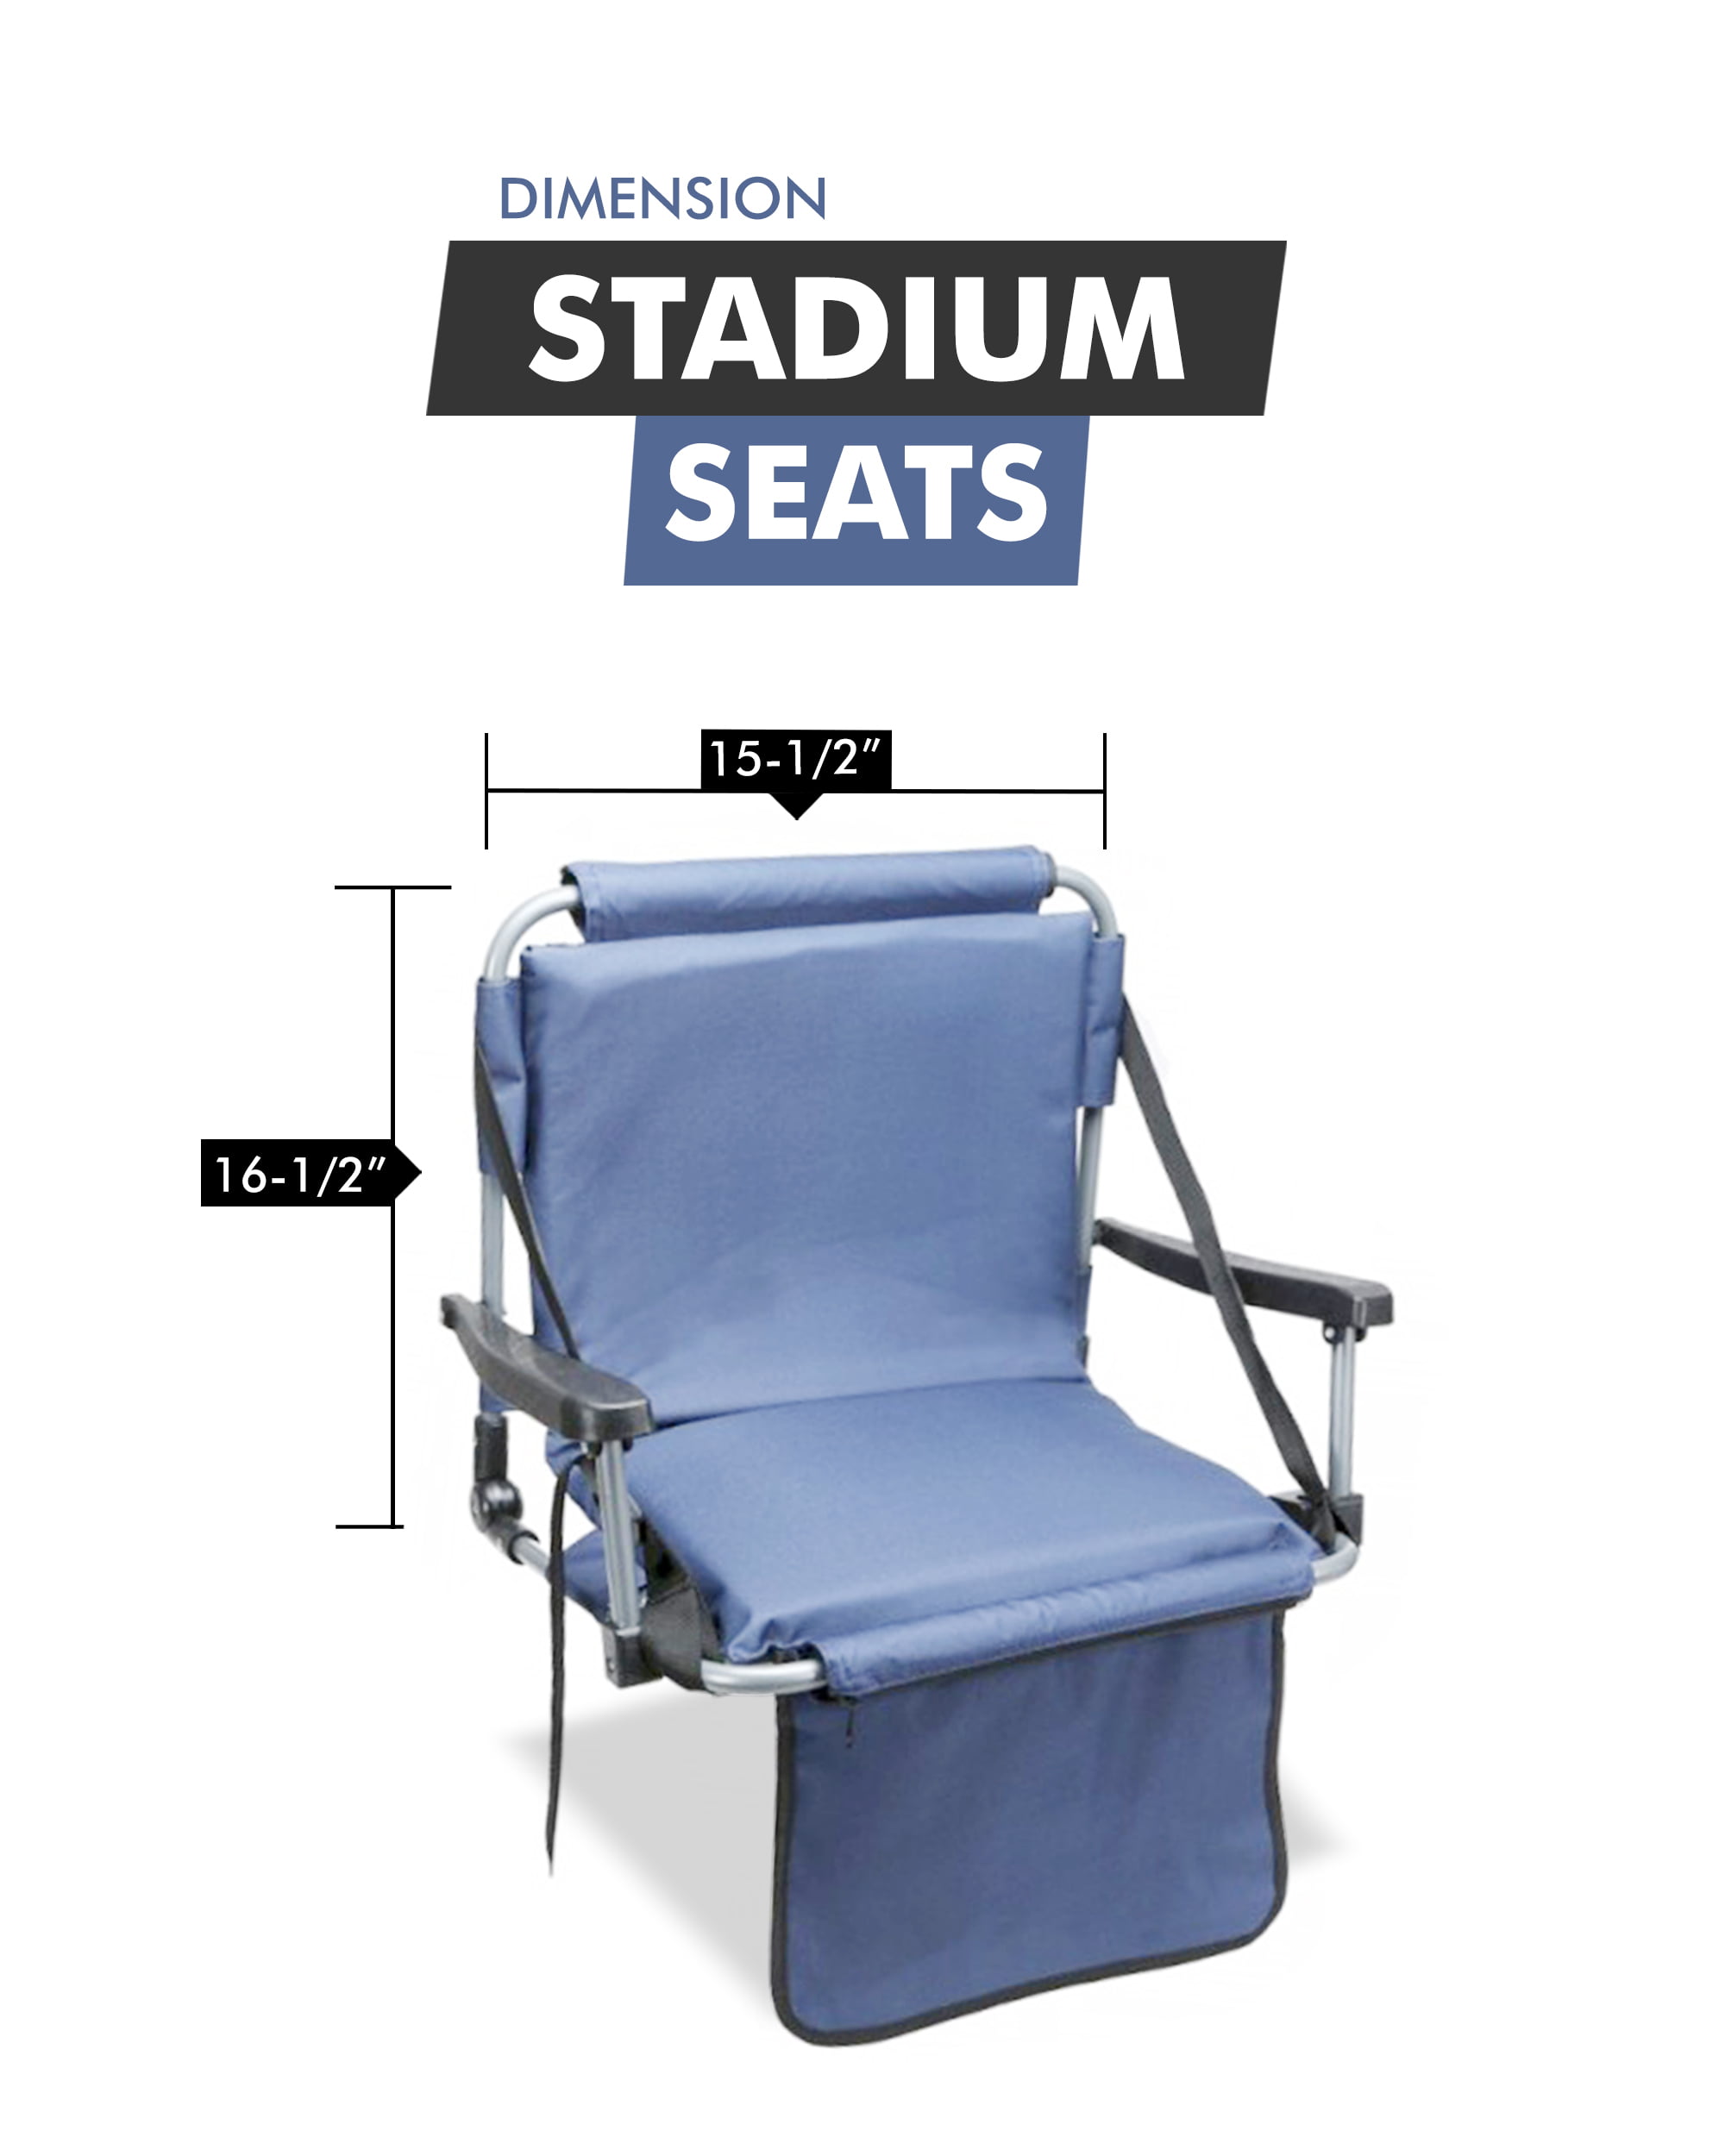 Charnetta Double Heated Folding Stadium Seat Arlmont & Co.